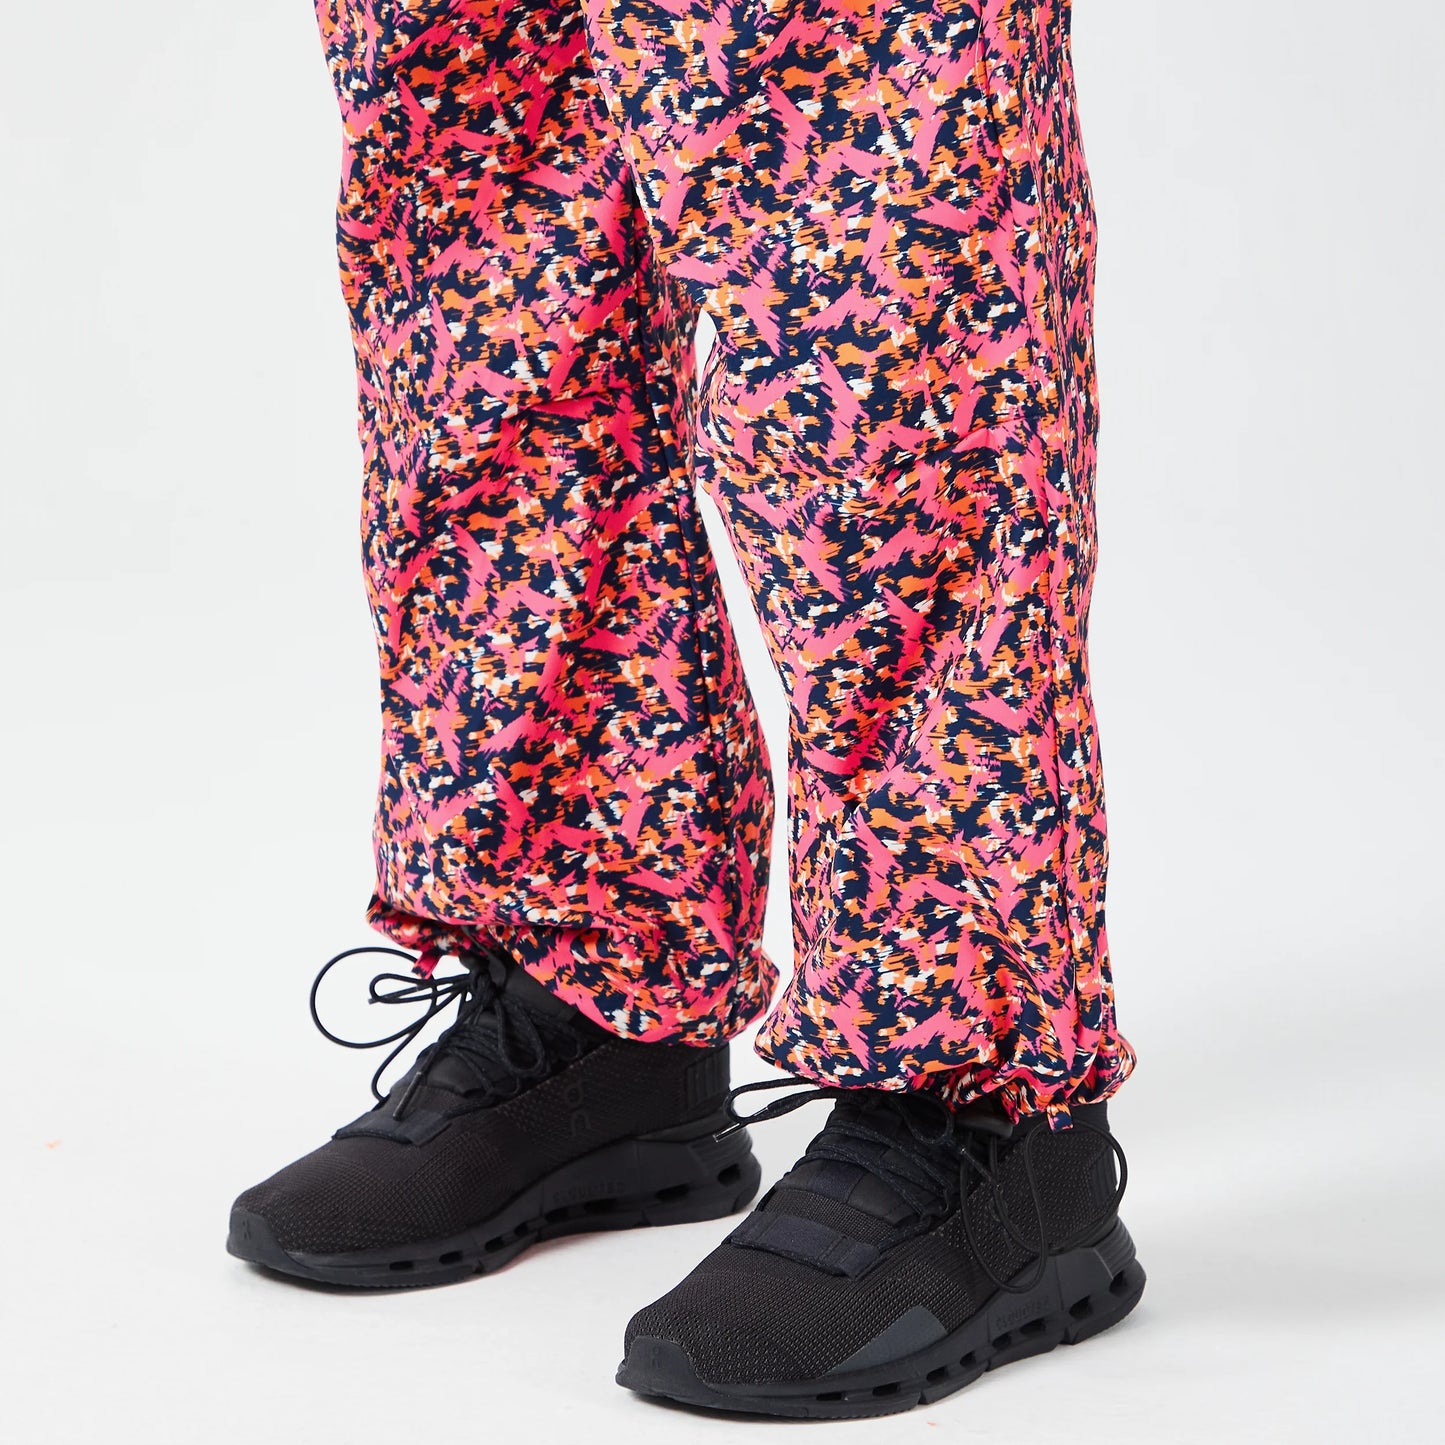 Code Para Pants - Hot Pink Glitch Camo